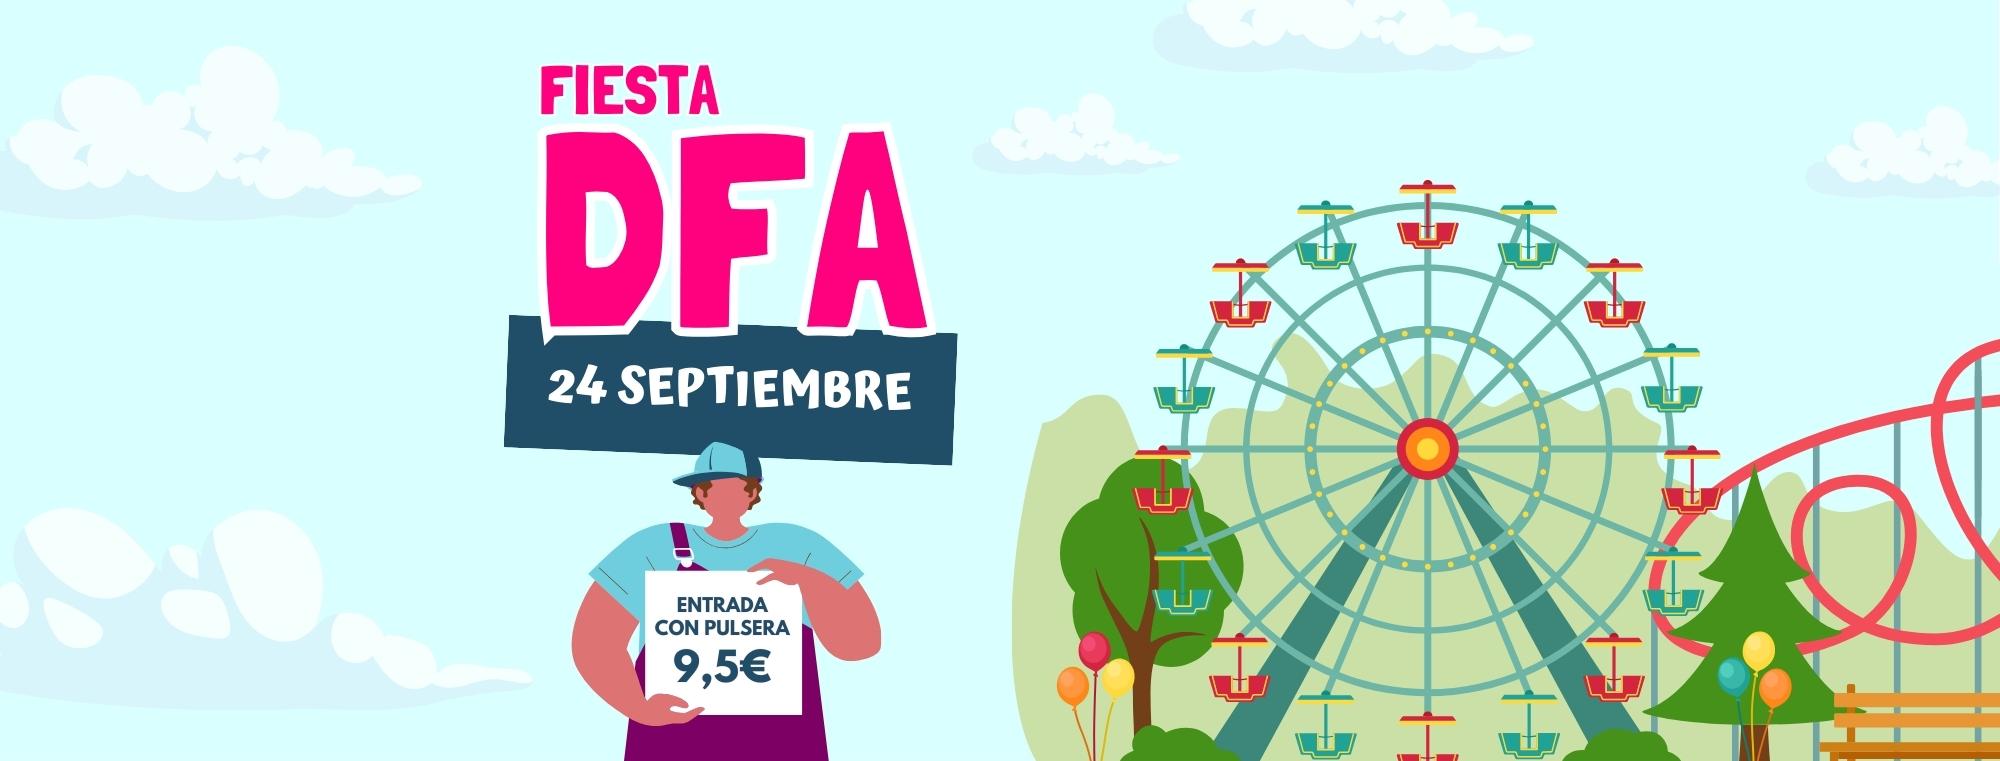 Fiesta Dfa